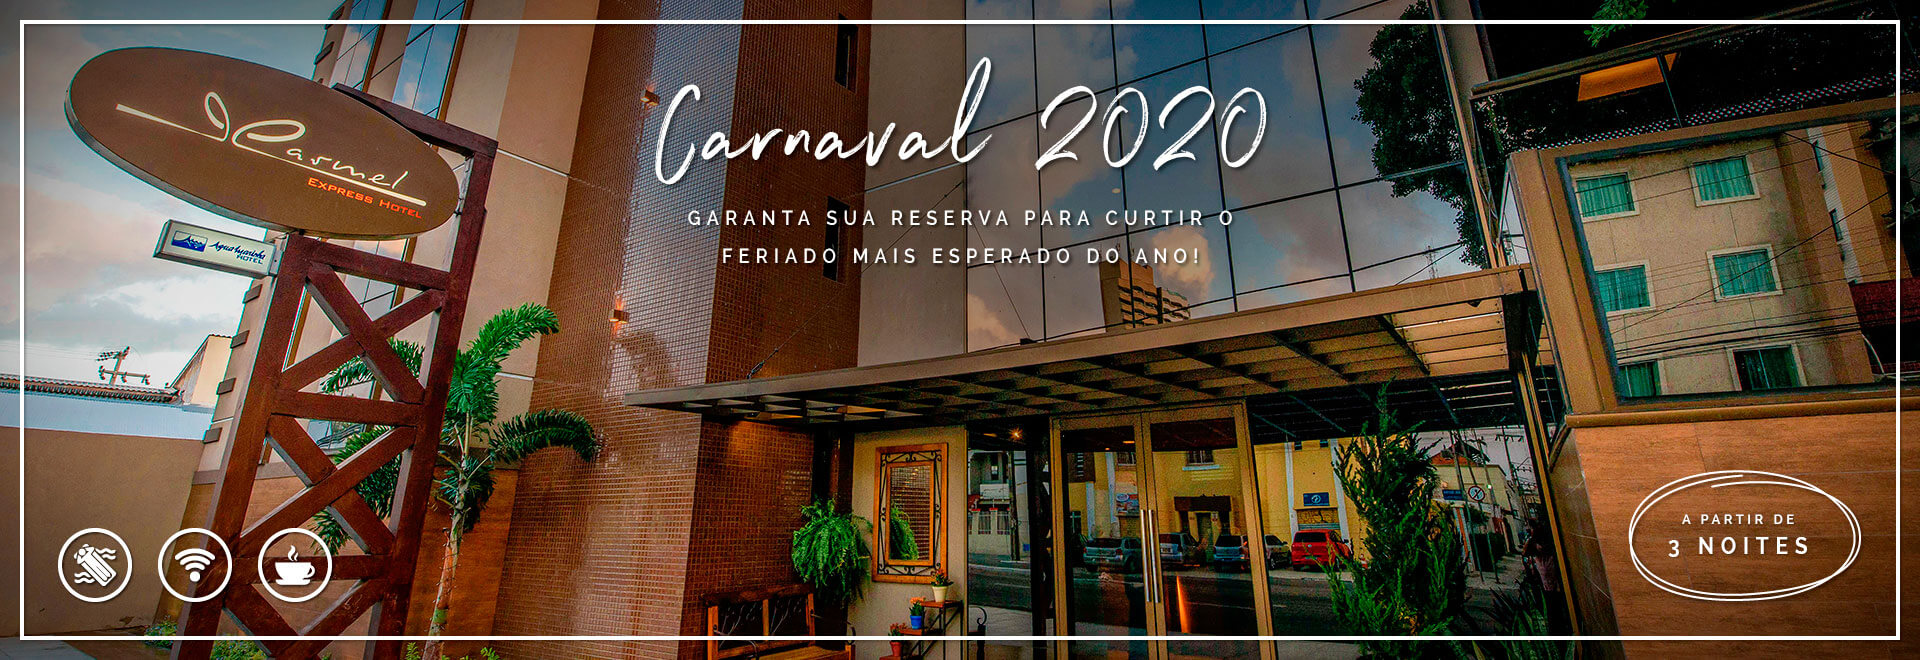 CARNAVAL 2020 02